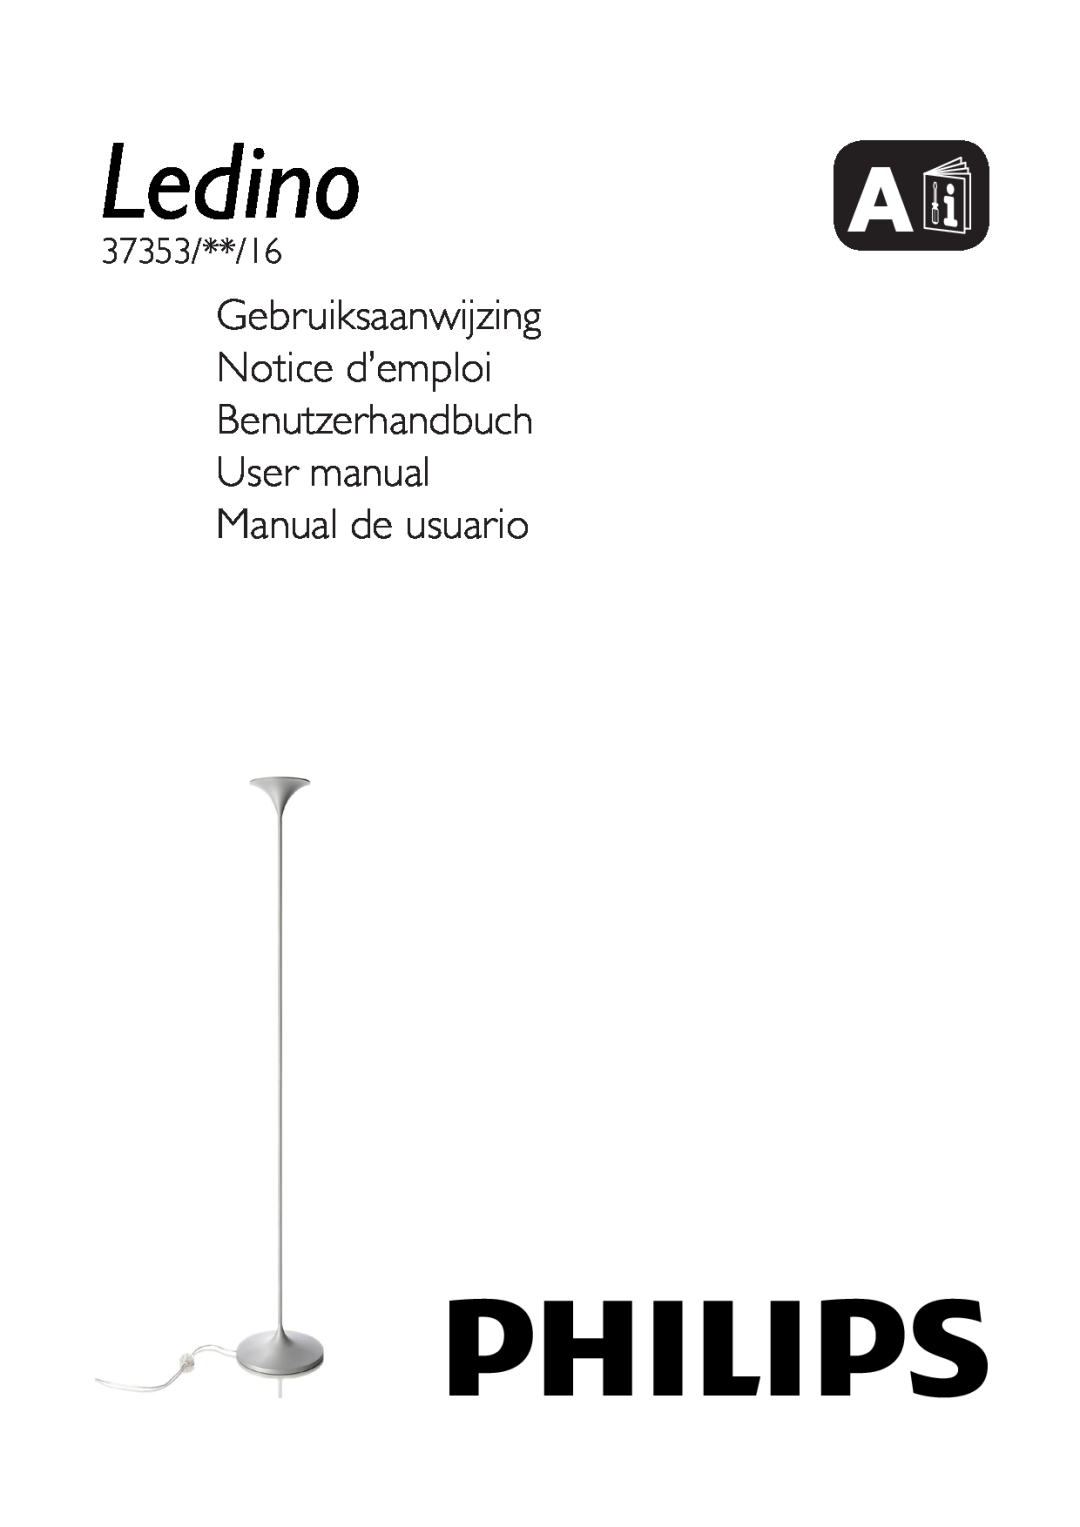 Philips 37353/87/16 user manual Gebruiksaanwijzing Notice d’emploi, Benutzerhandbuch User manual Manual de usuario, Ledino 